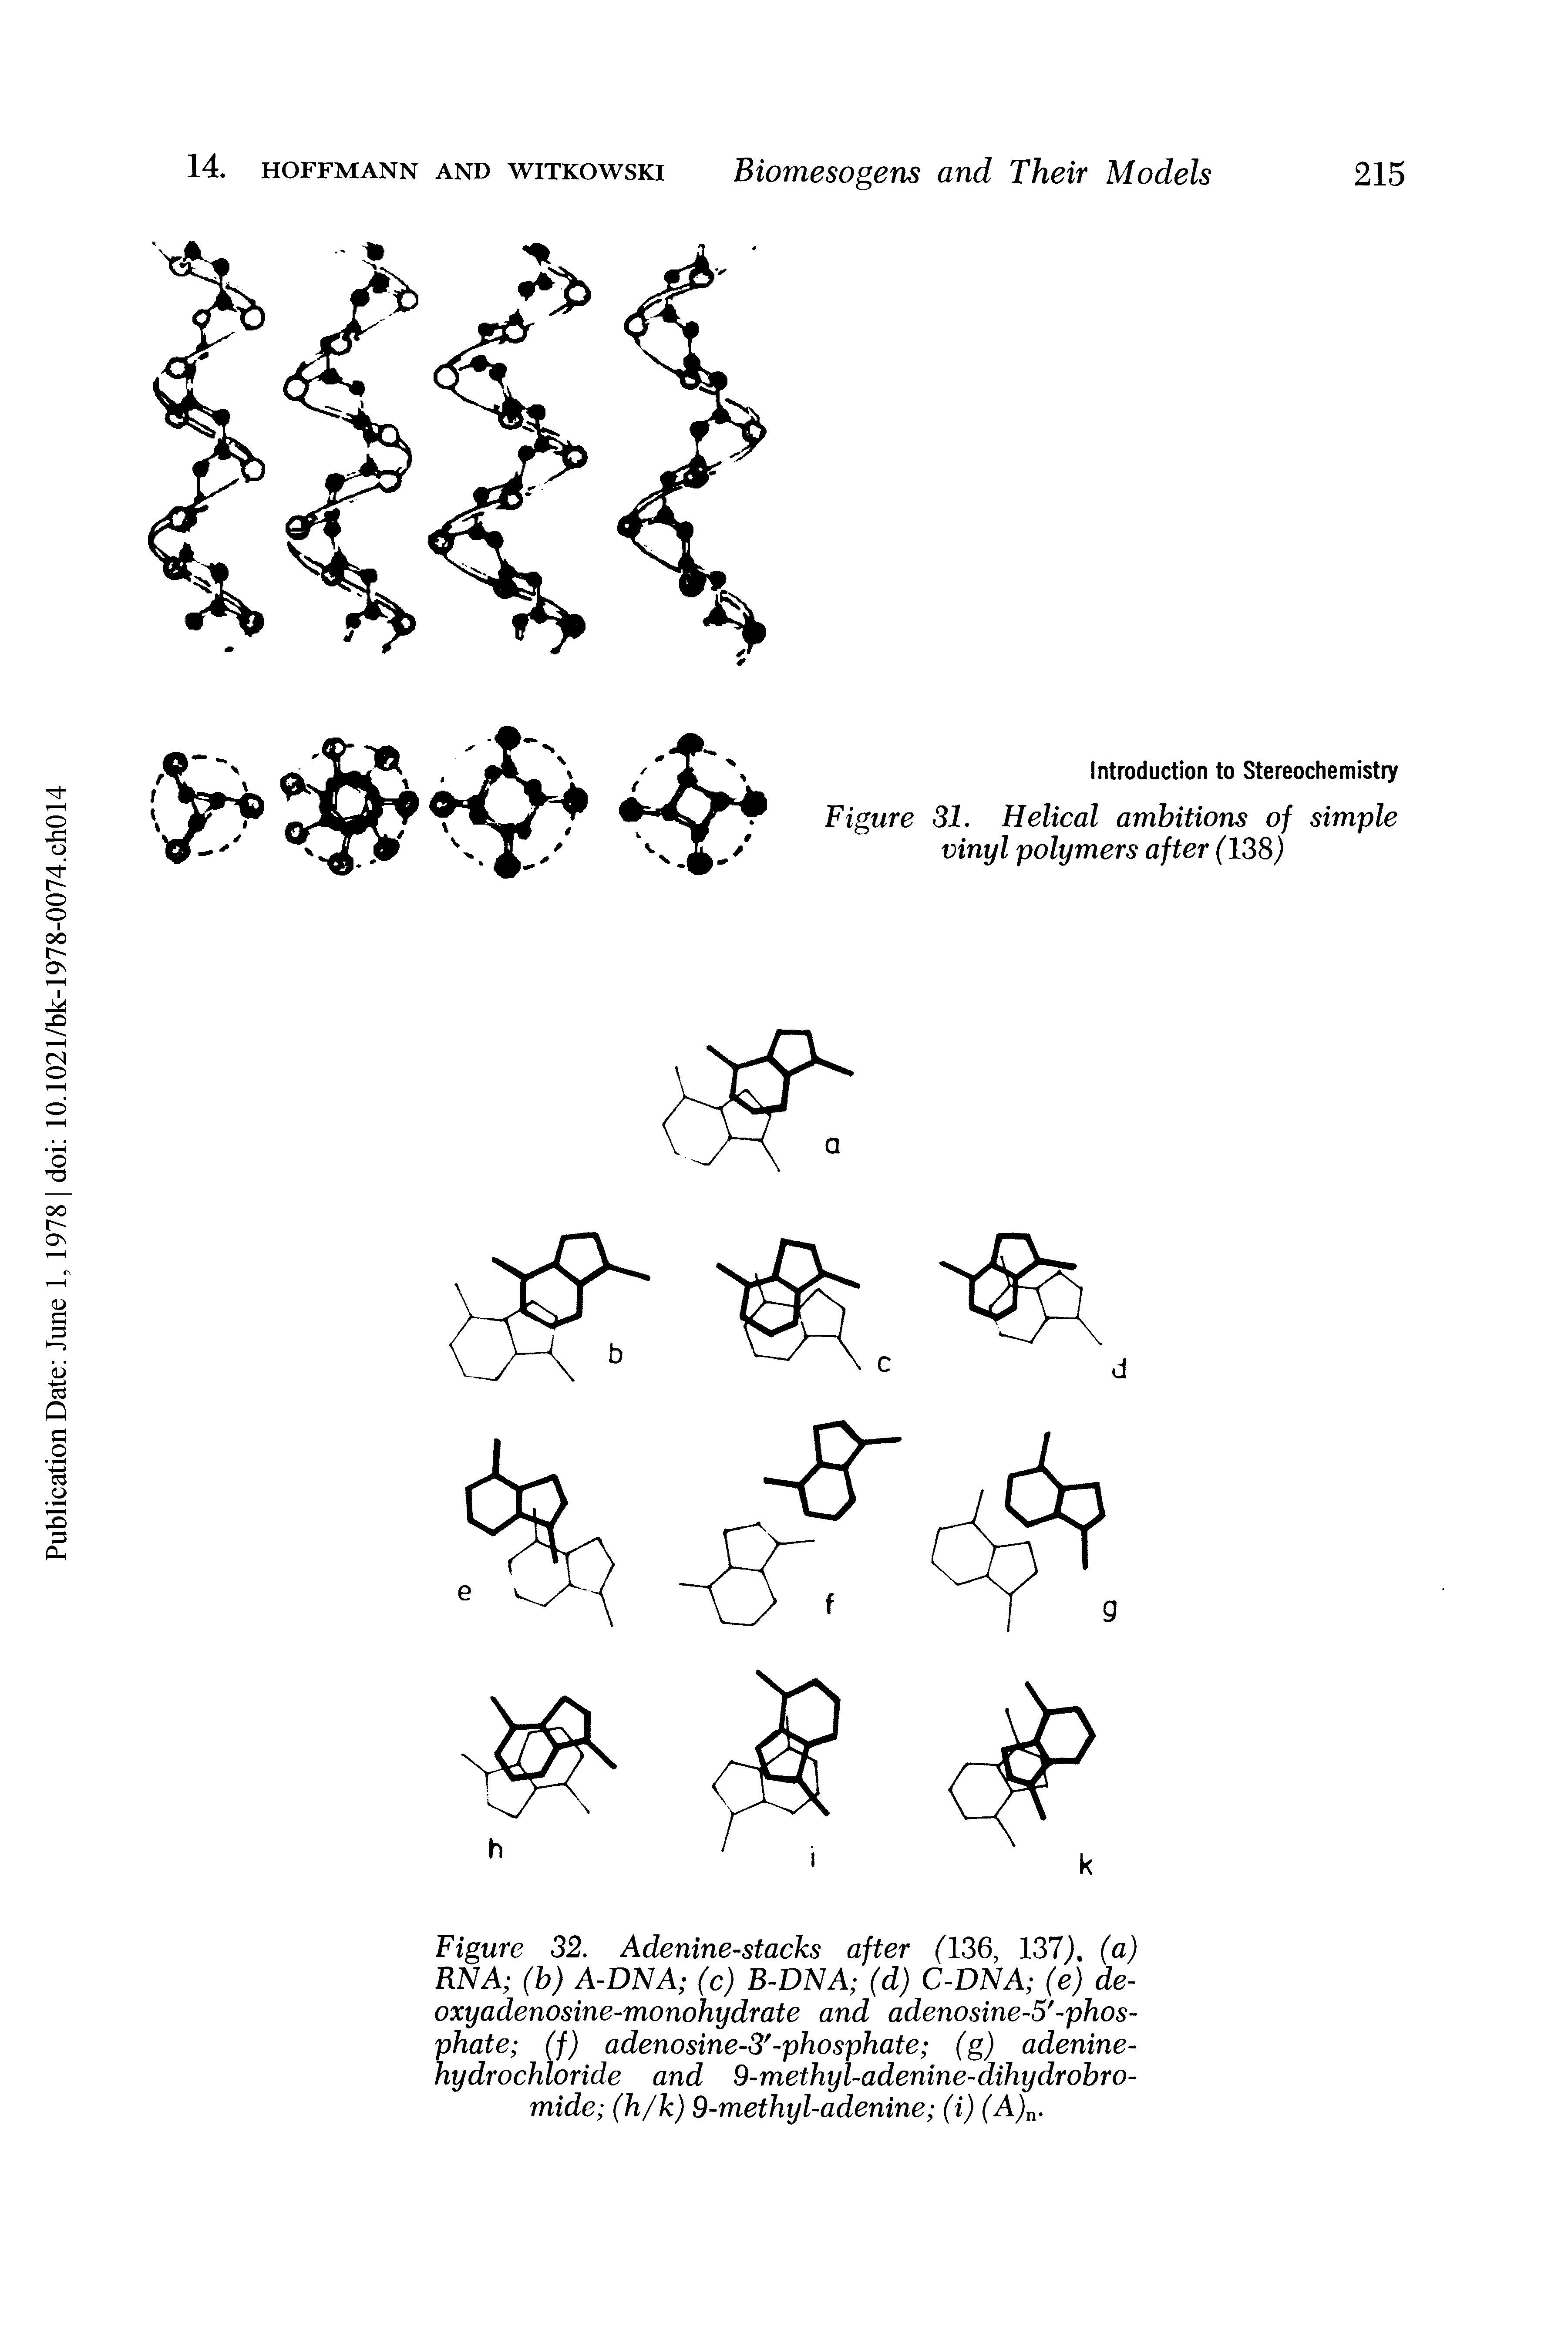 Figure 32. Adenine-stacks after (136, 137j. (a) RNA (b) A-DNA (c) B-DNA (d) C-DNA (e) de-oxyadenosine-monohydrate and adenosine-5 -phosphate (f) adenosine-3 -phosphate (g) adenine-hydrochloride and 9-methyl-adenine-dihydrobromide (h/k) 9-methyl-adenine (i)(A). ...